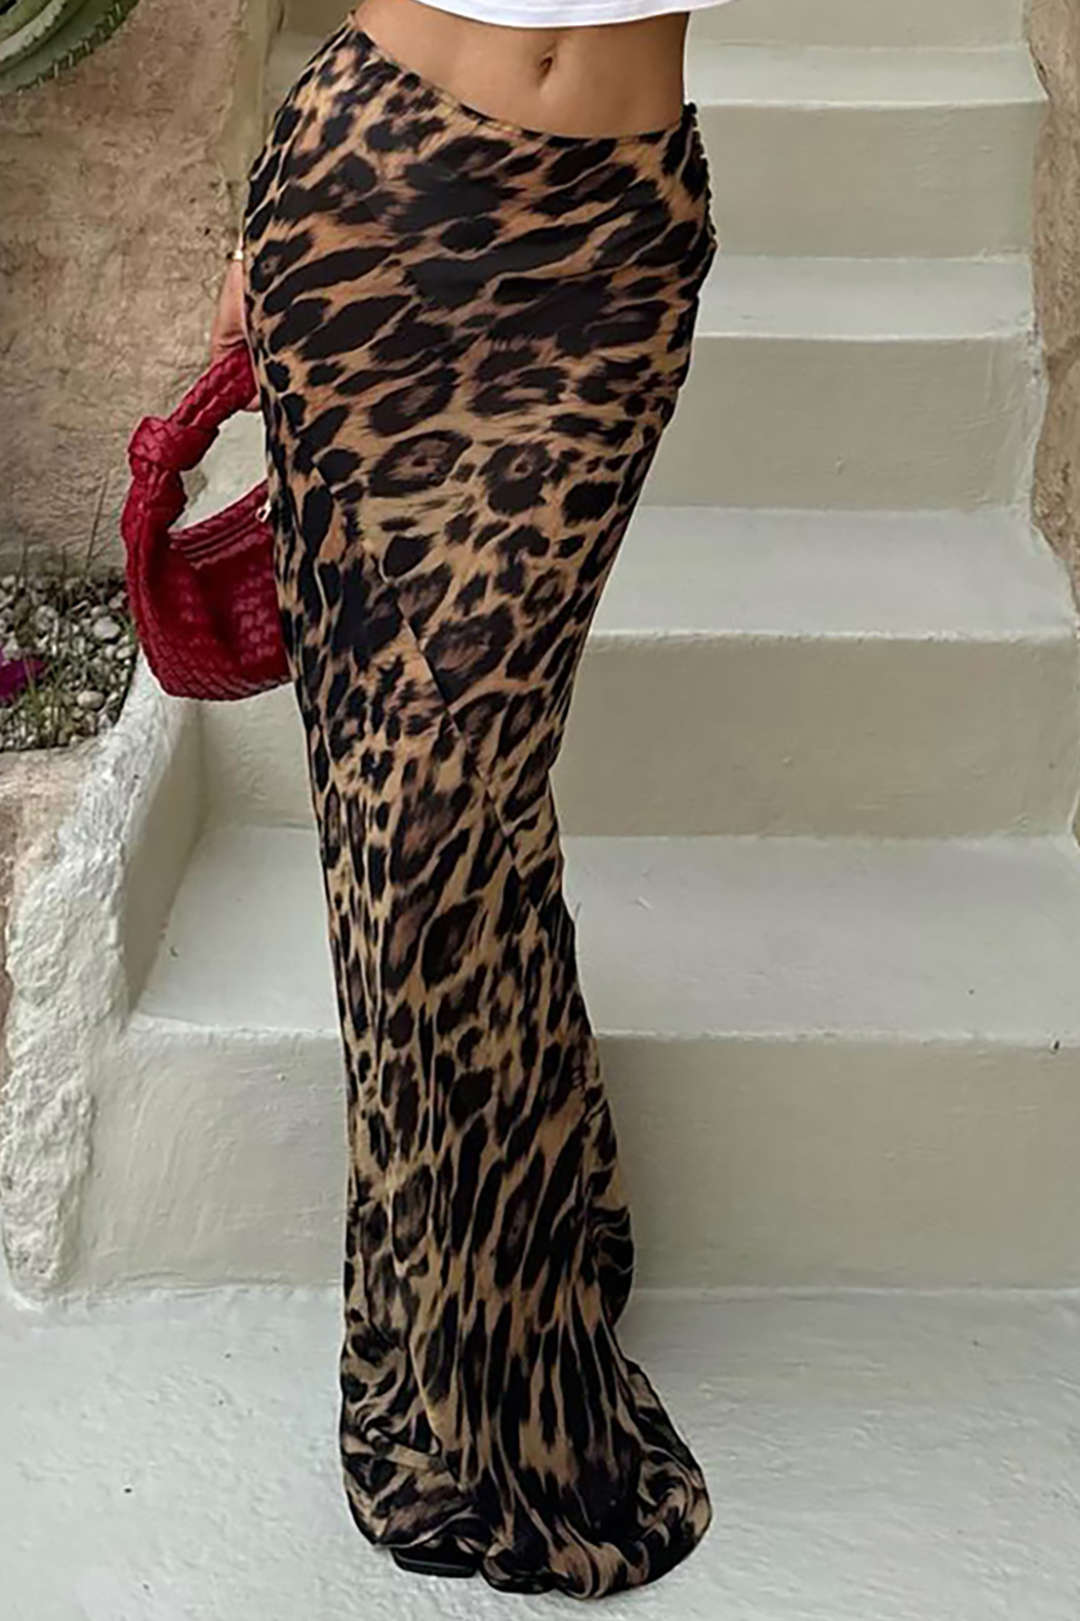 Leopard Print Mermaid Skirt